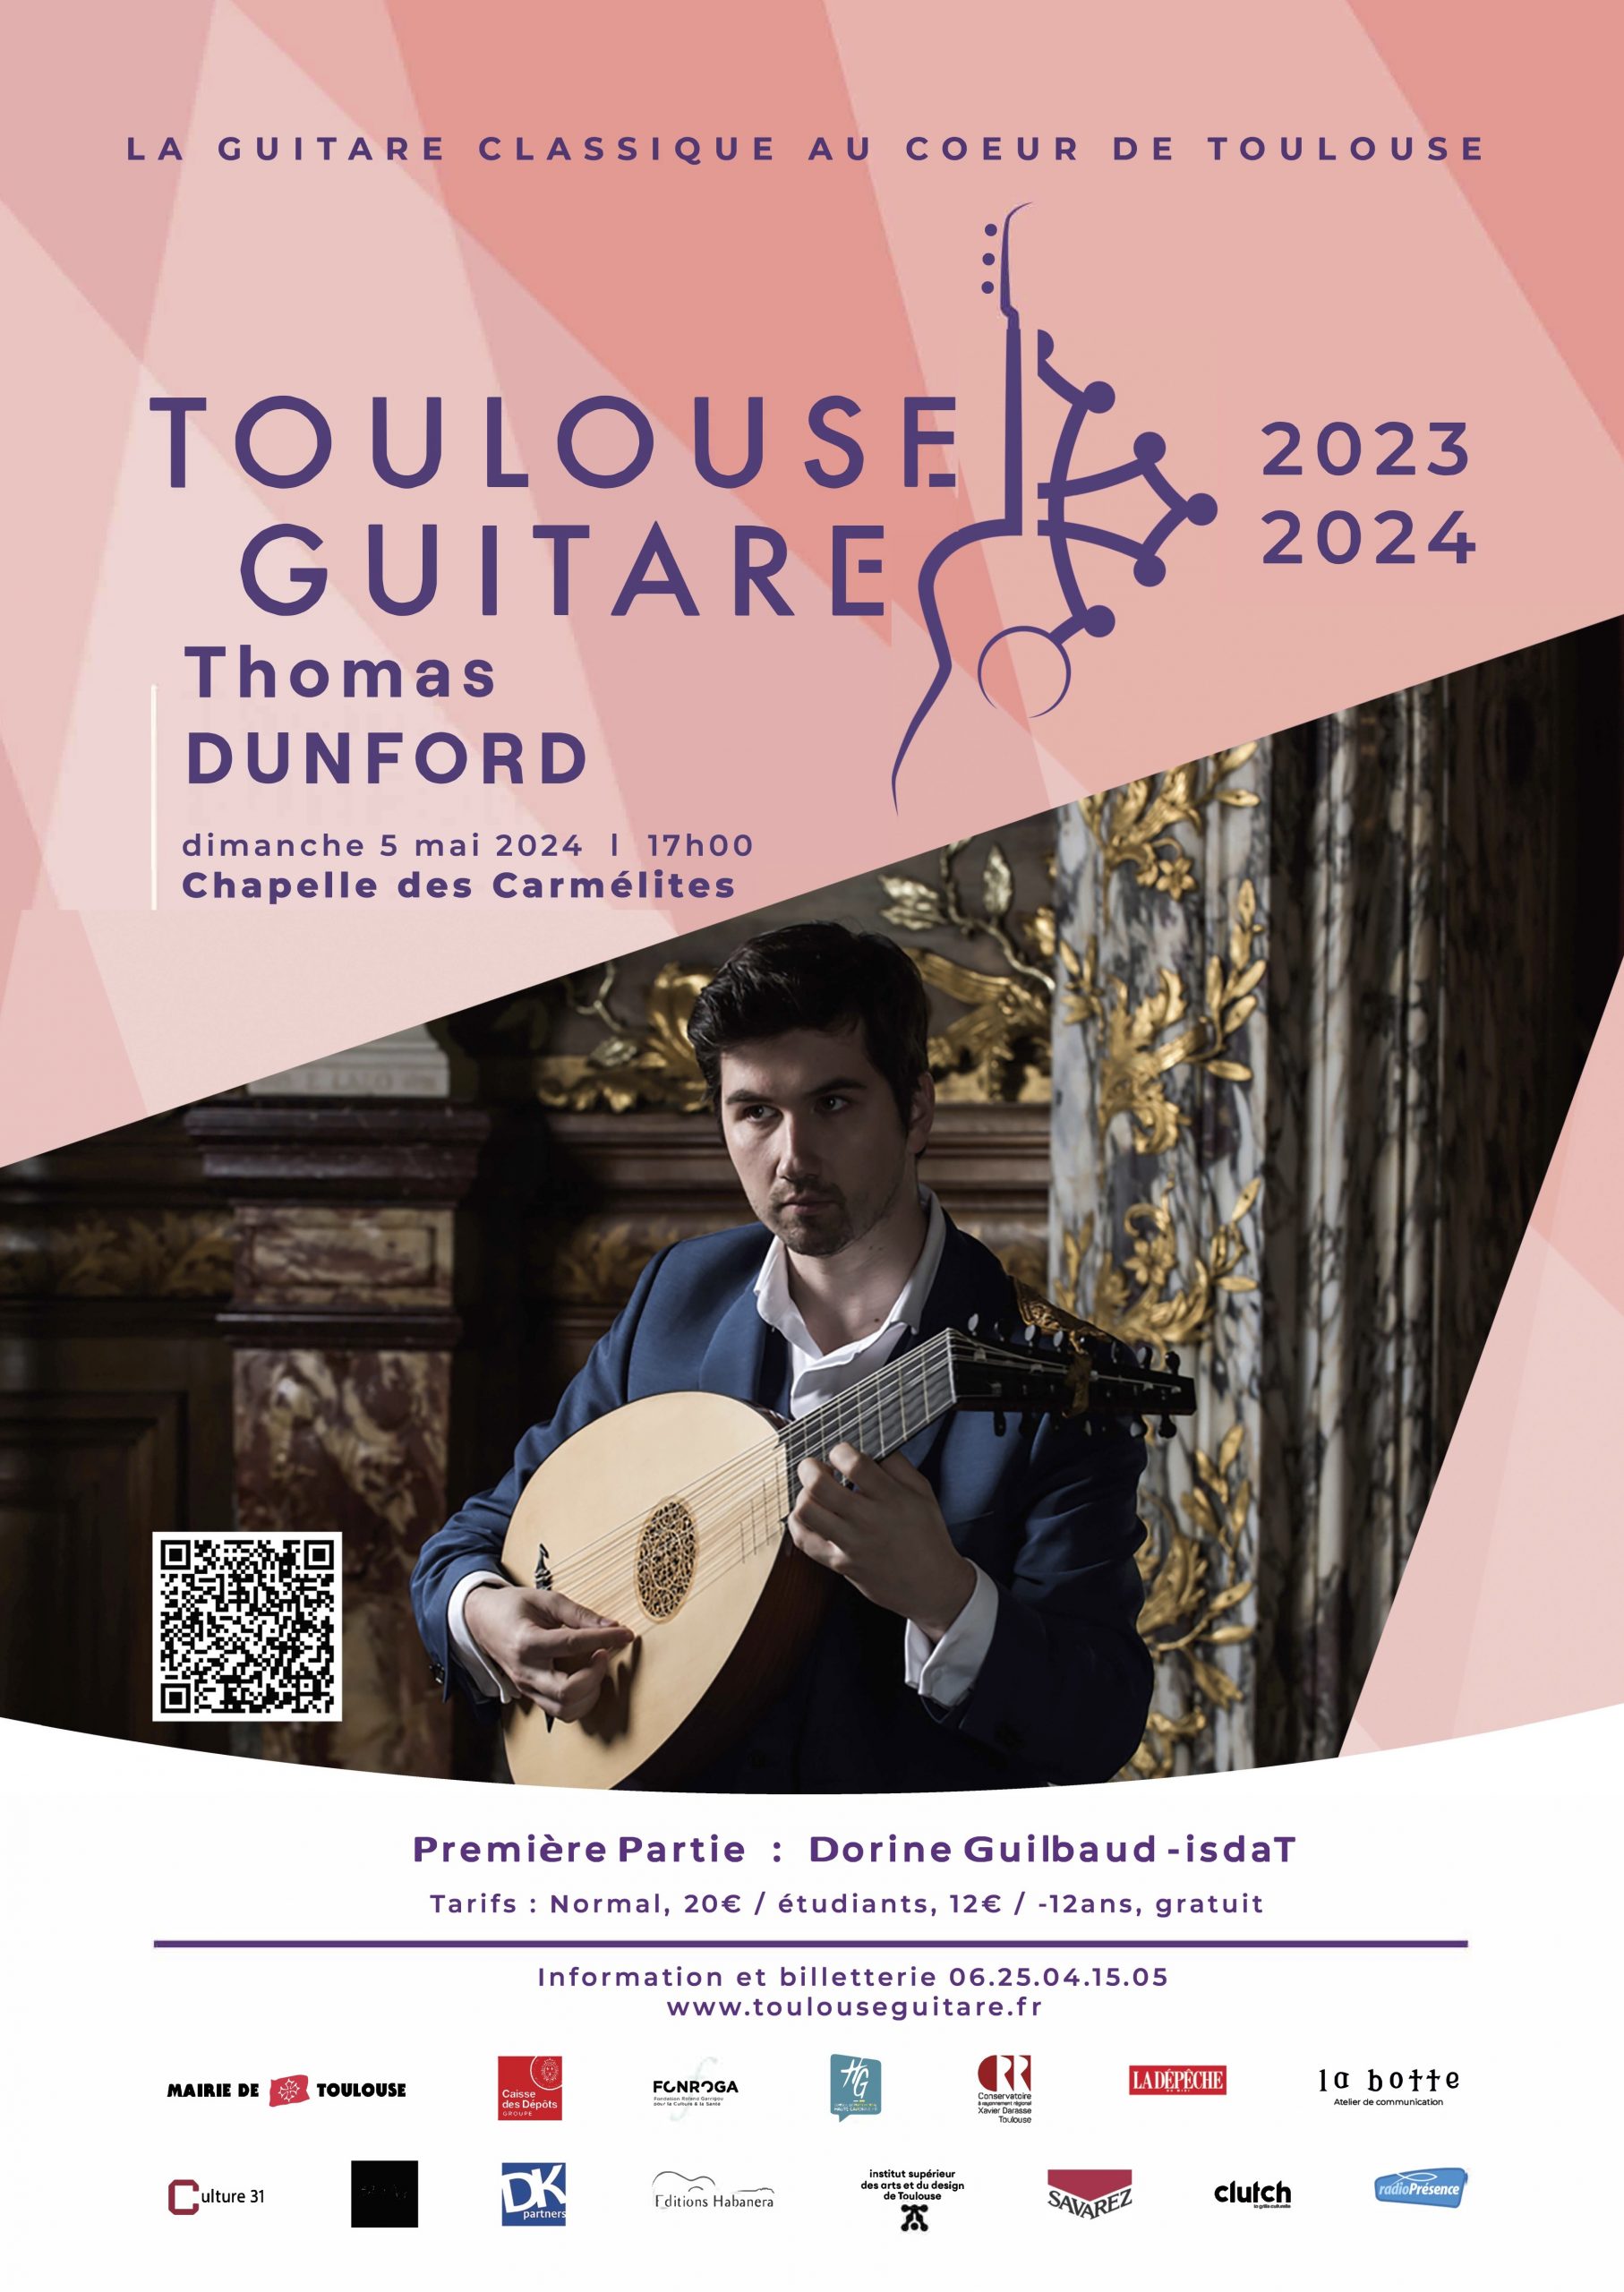 Toulouse Guitare Thomas Dunford